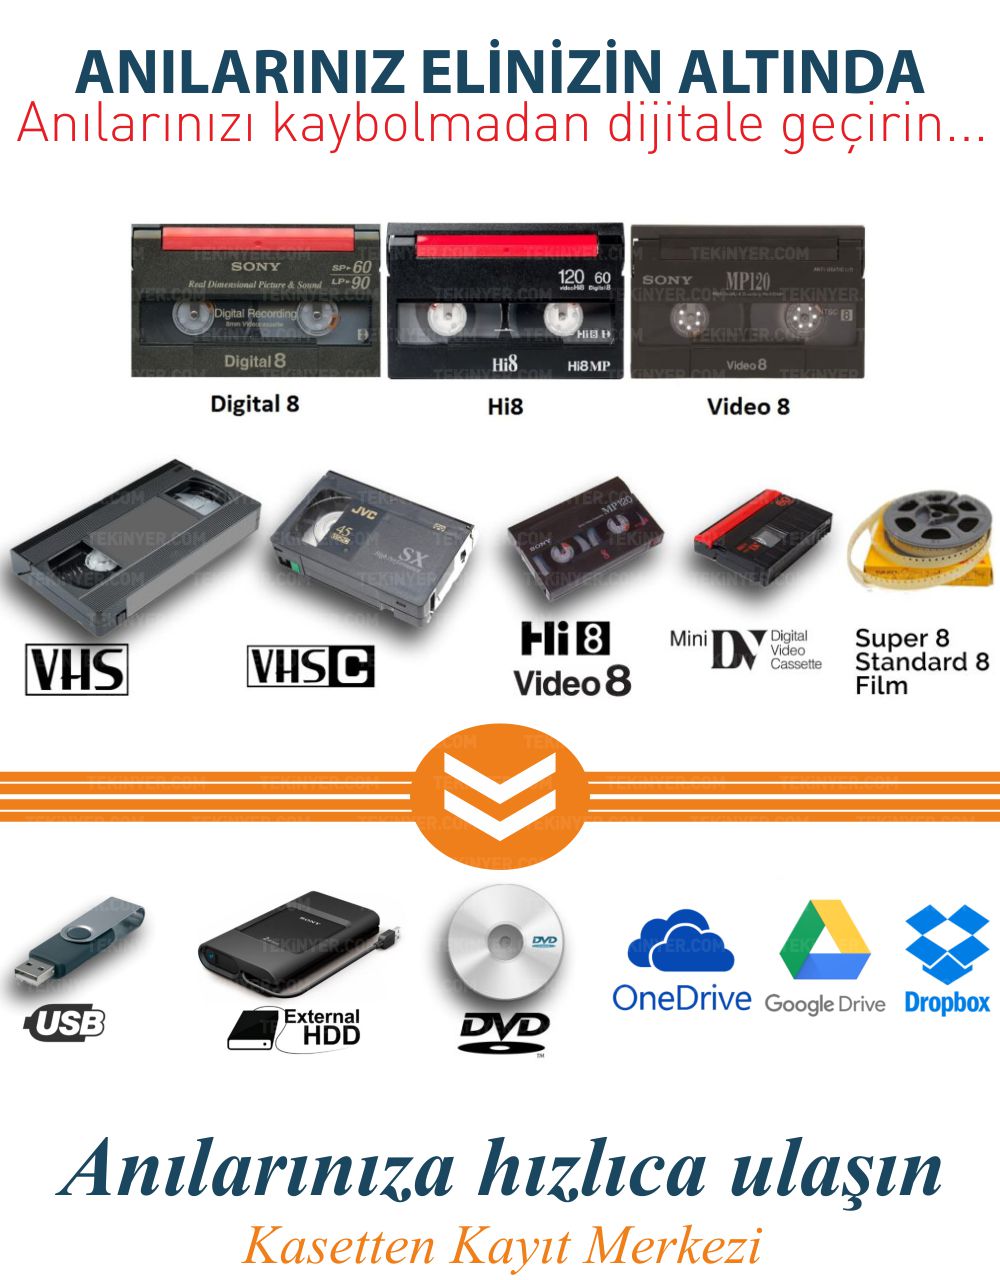 Video Kasetten HDD yada USB Bullege Kaset Film Bant Resim